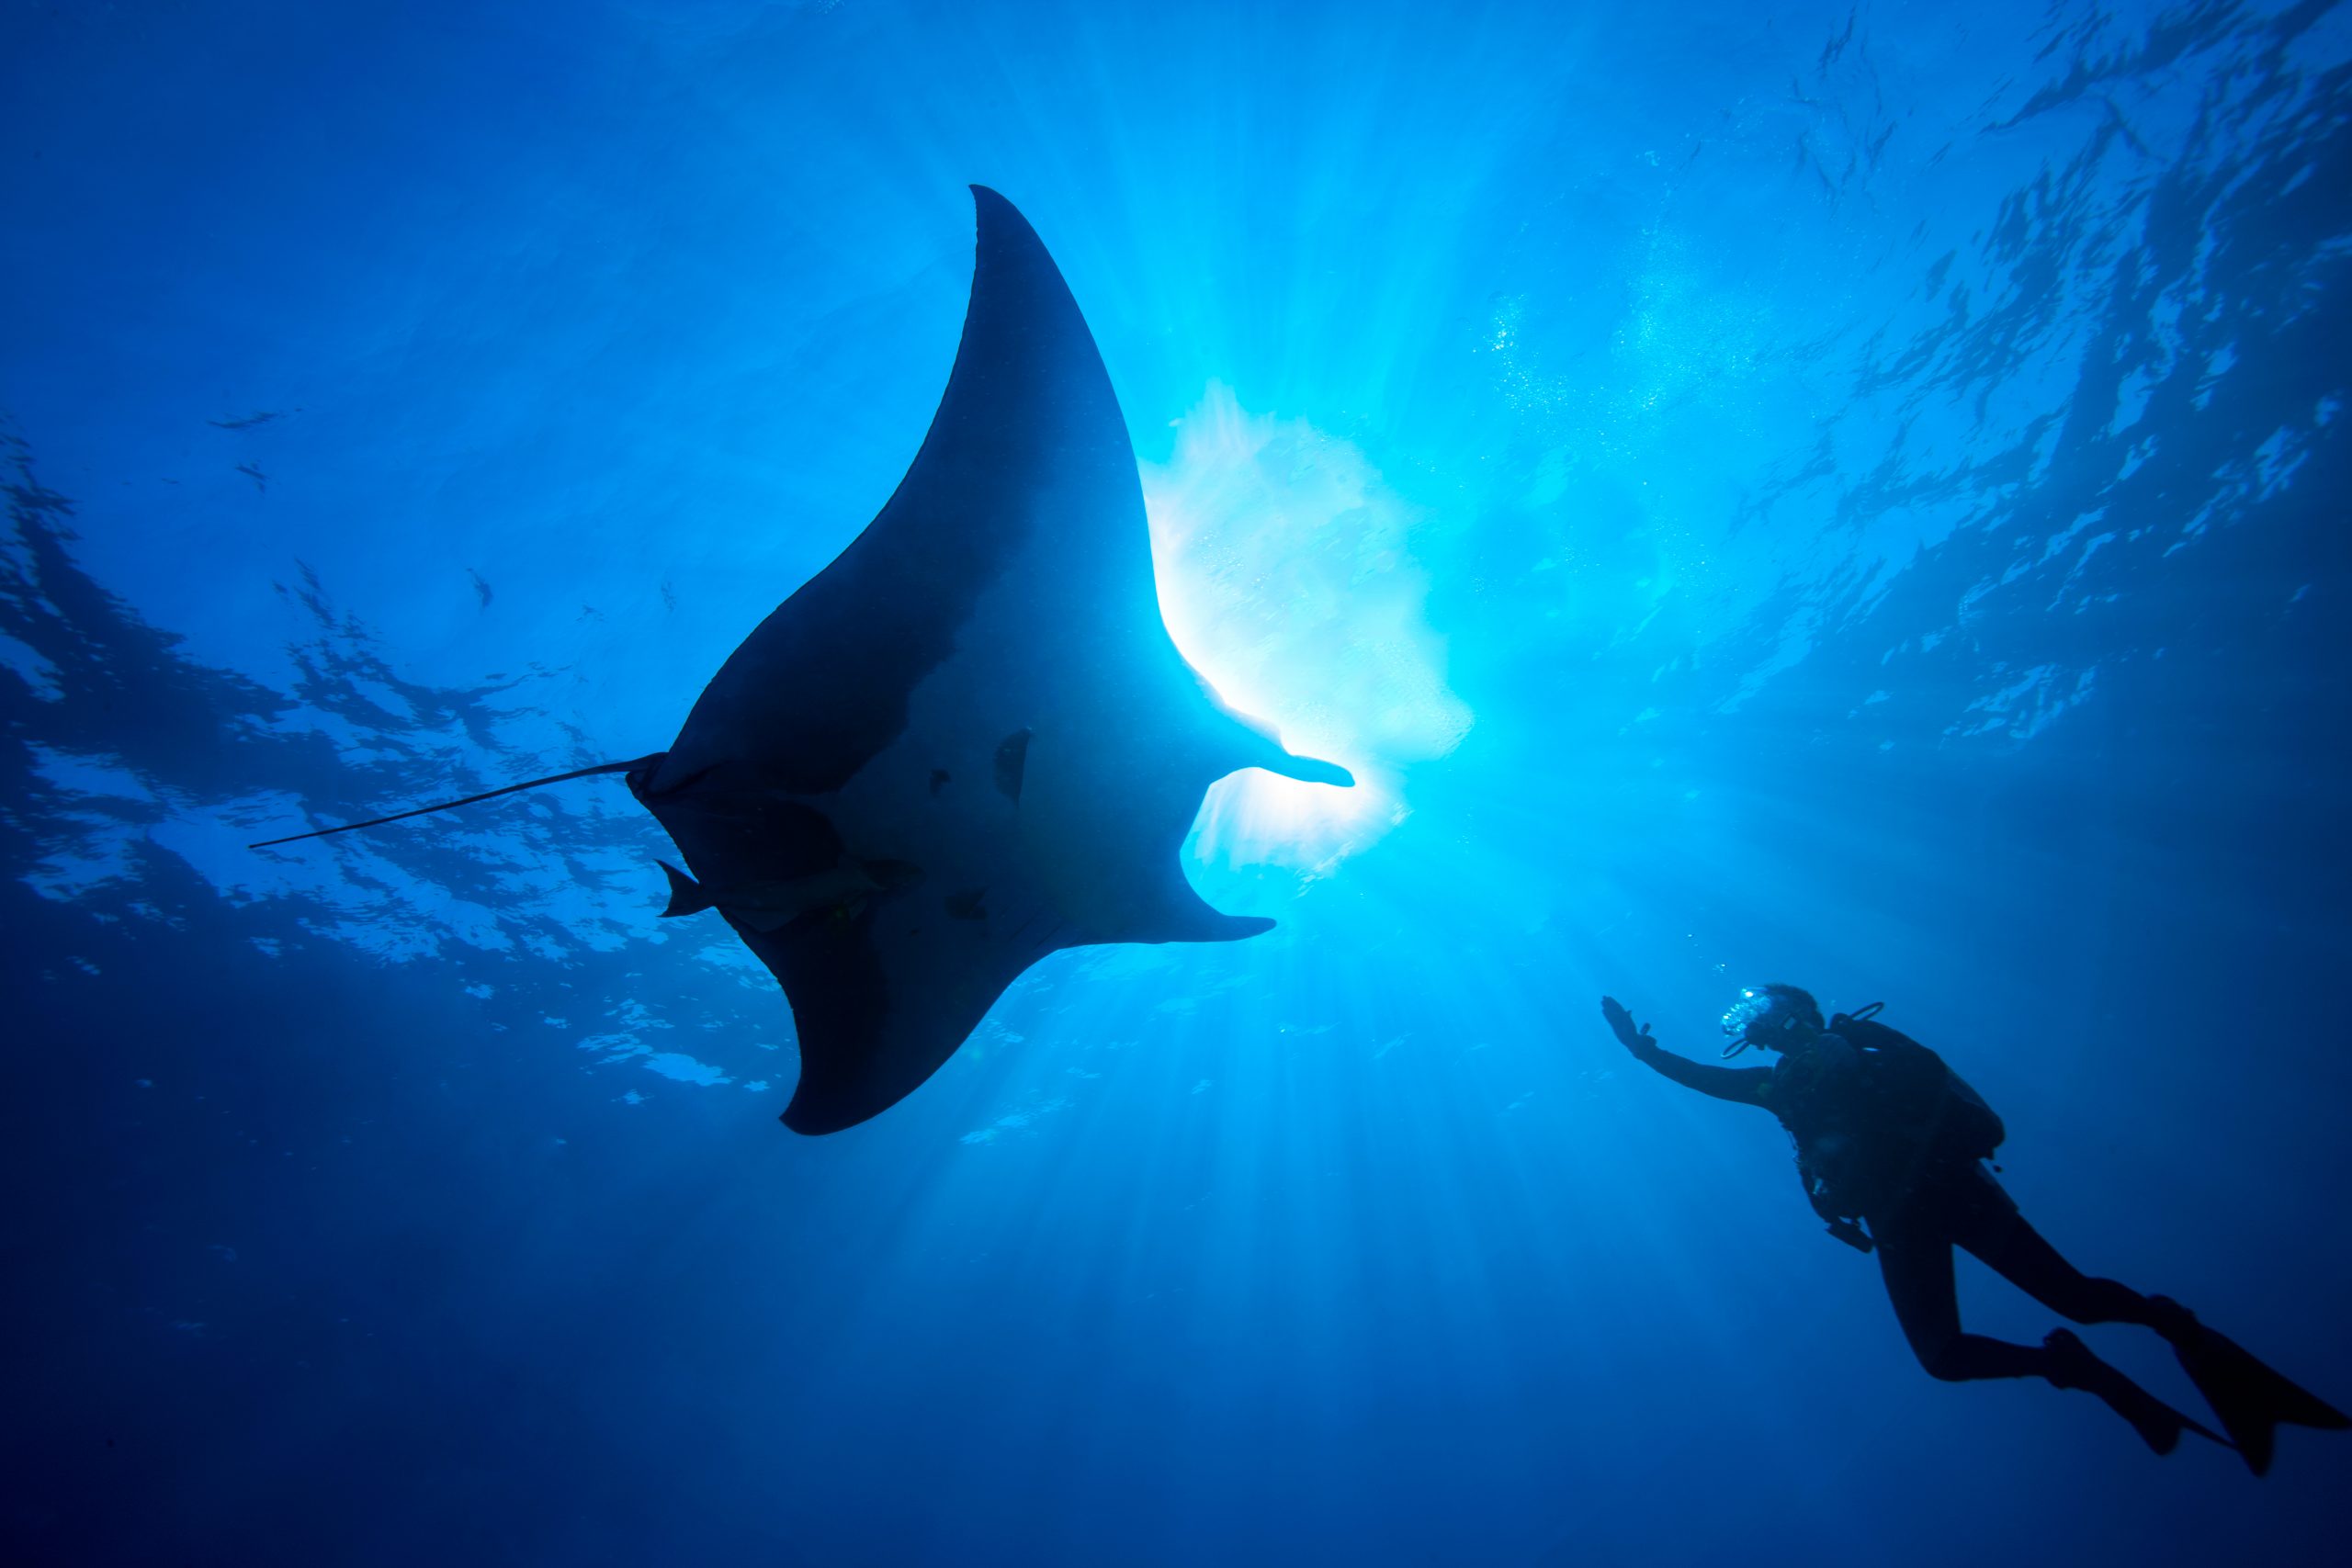 Scuba diver reaches towards a majestic manta ray underwater. ,Mexico